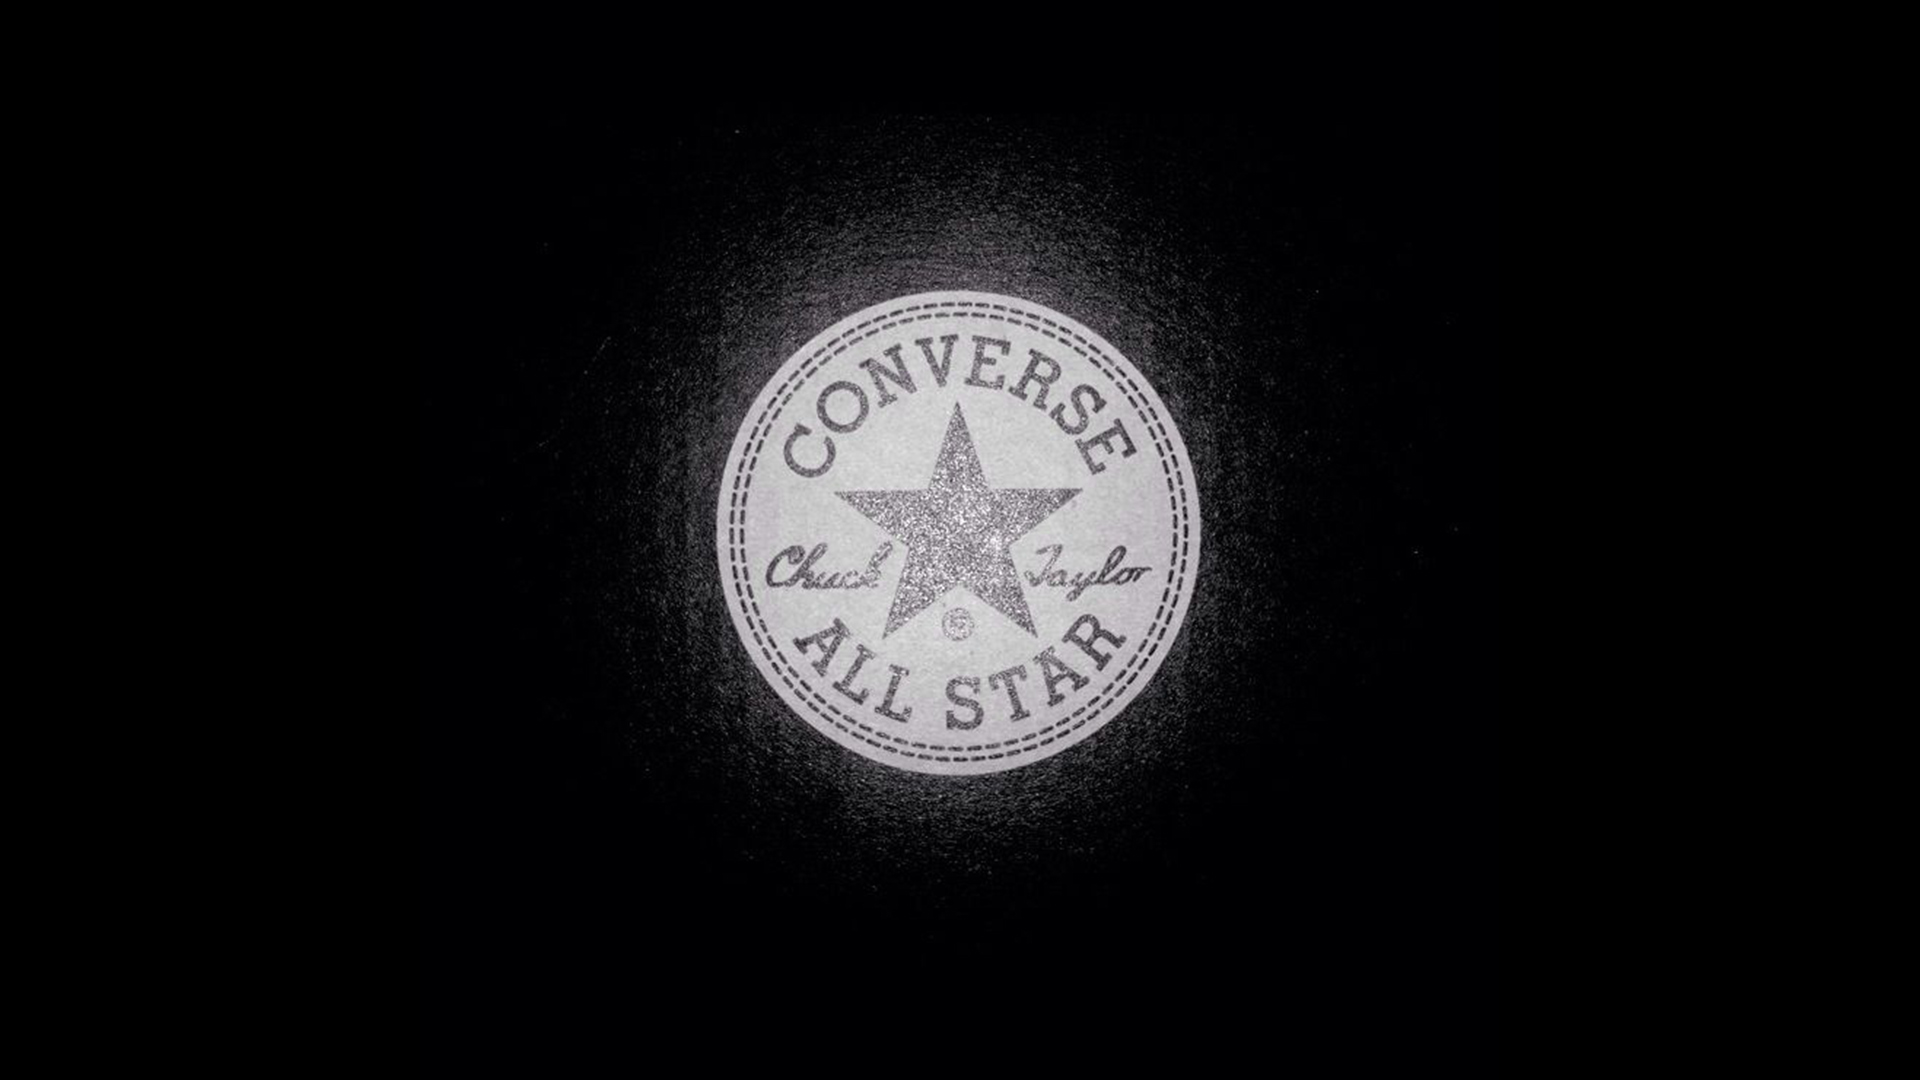 General 1920x1080 Converse logo minimalism monochrome simple background